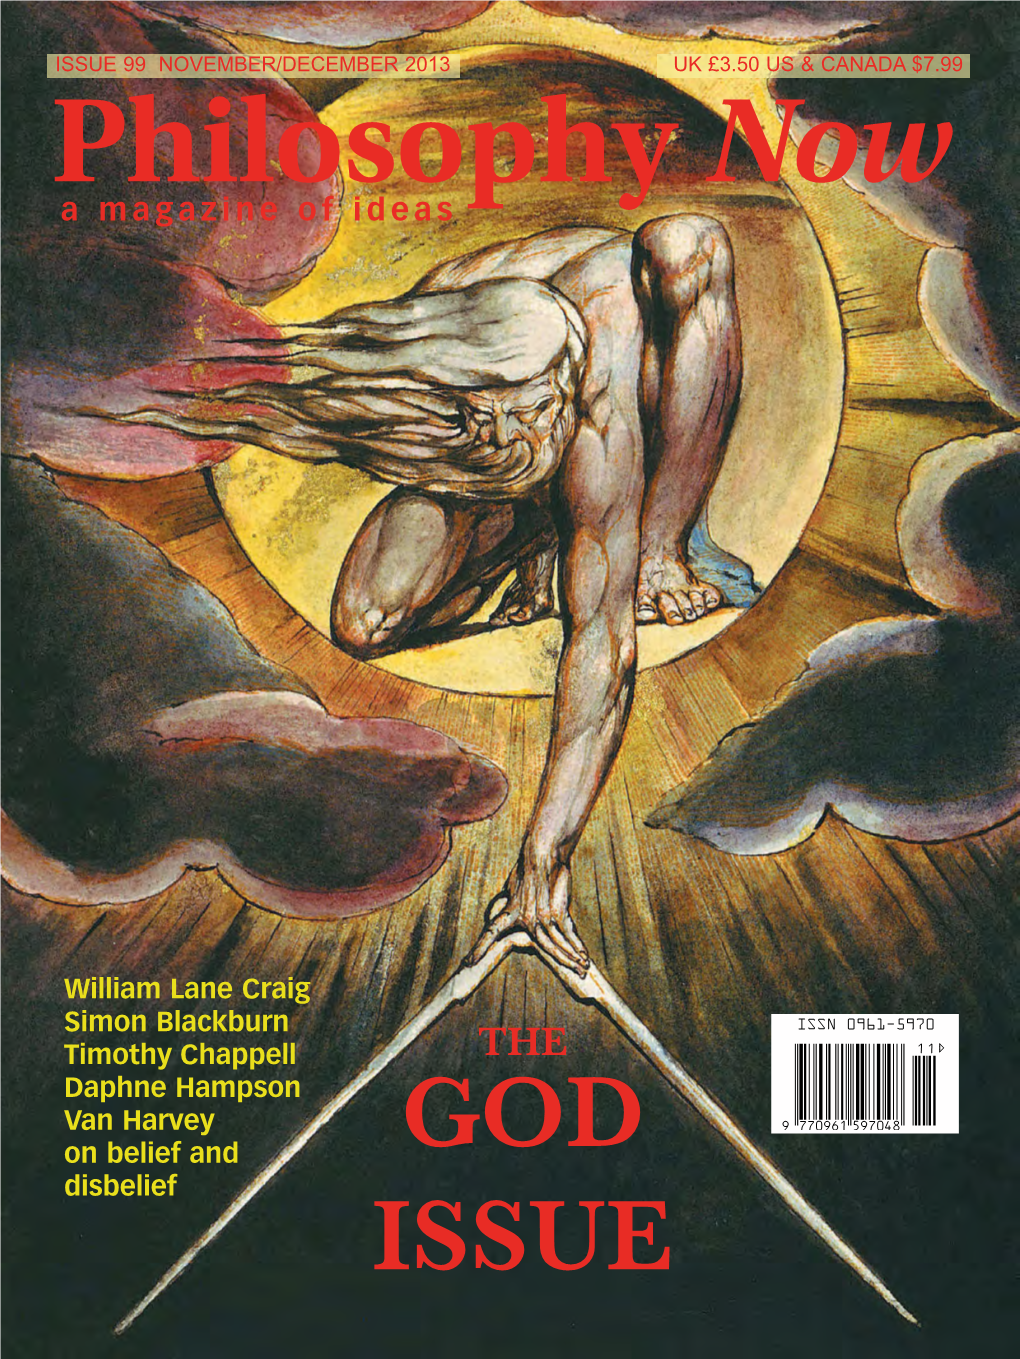 Philosophy Now ISSUE 99 Nov/Dec 2013